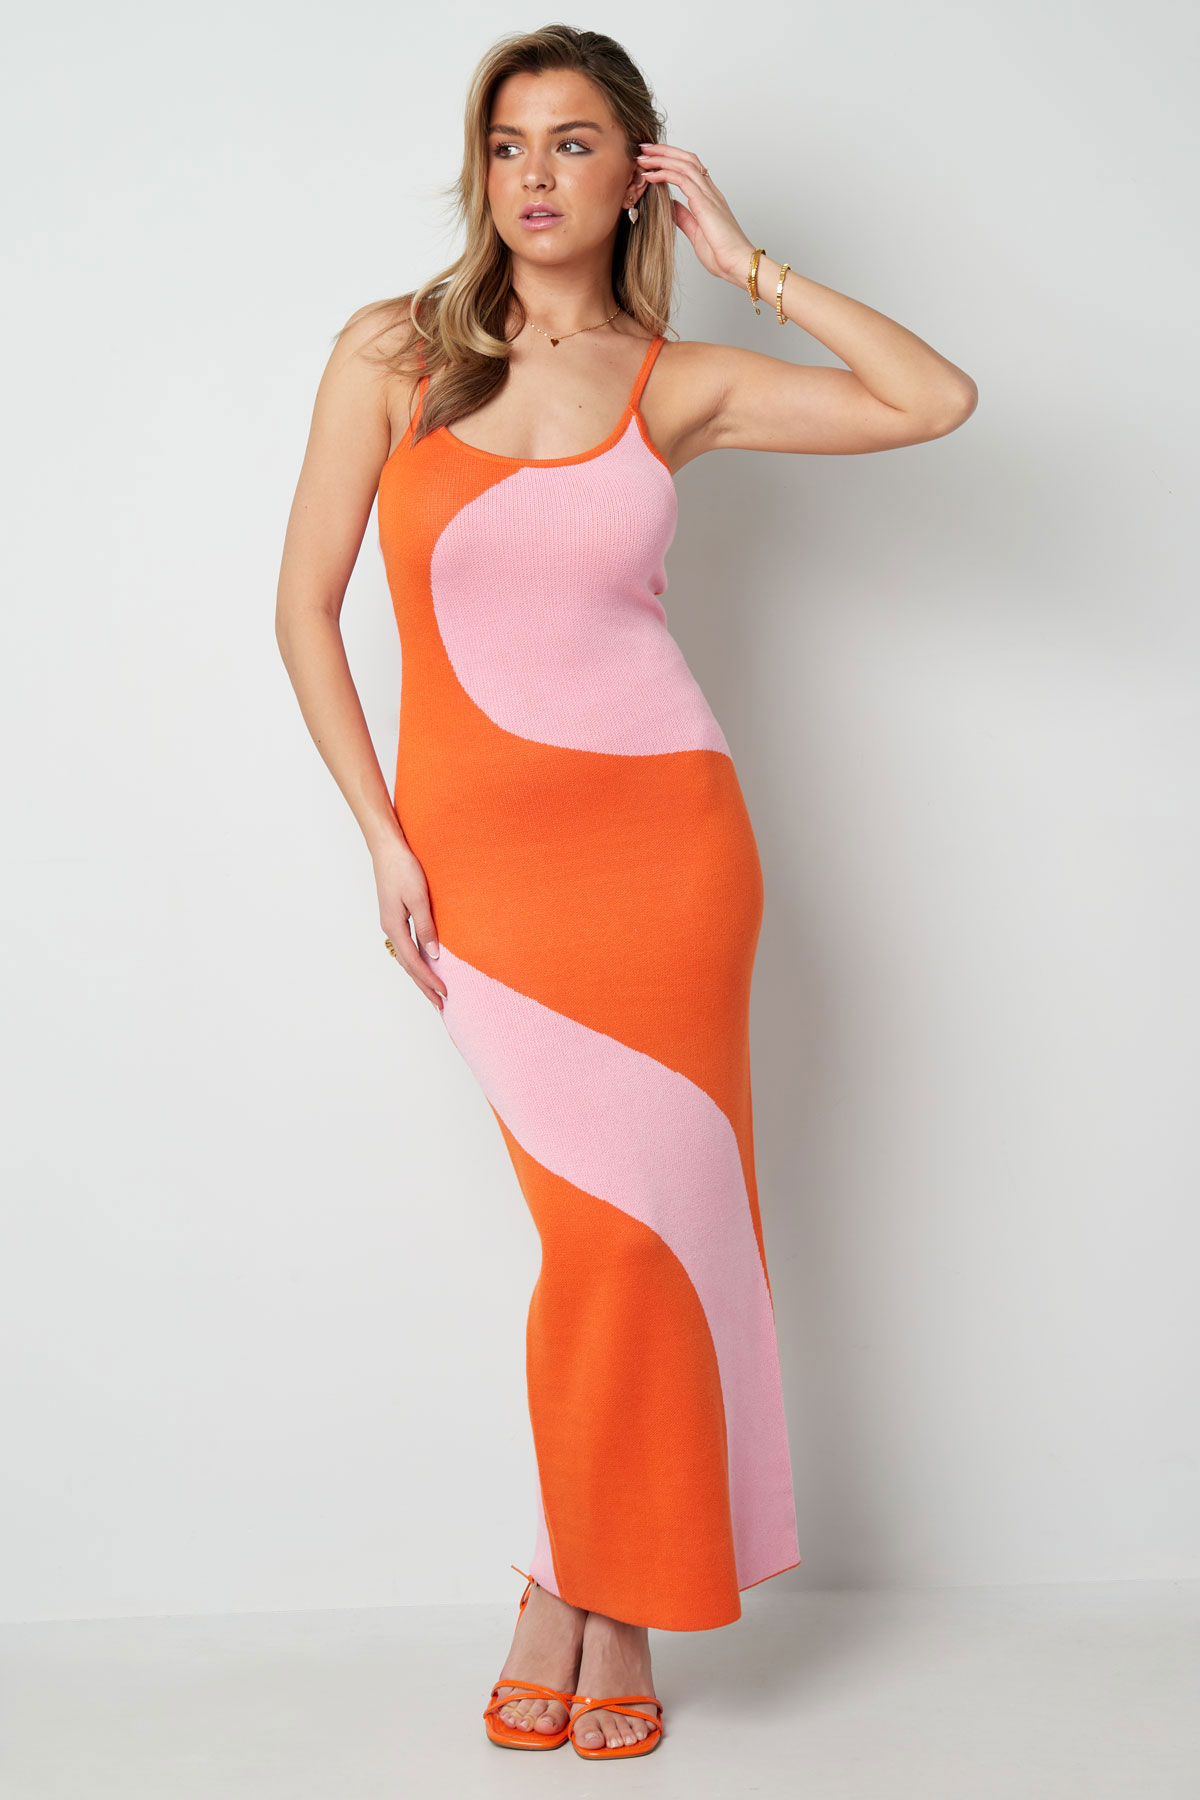 Organik desenli elbise - pembe turuncu Resim2